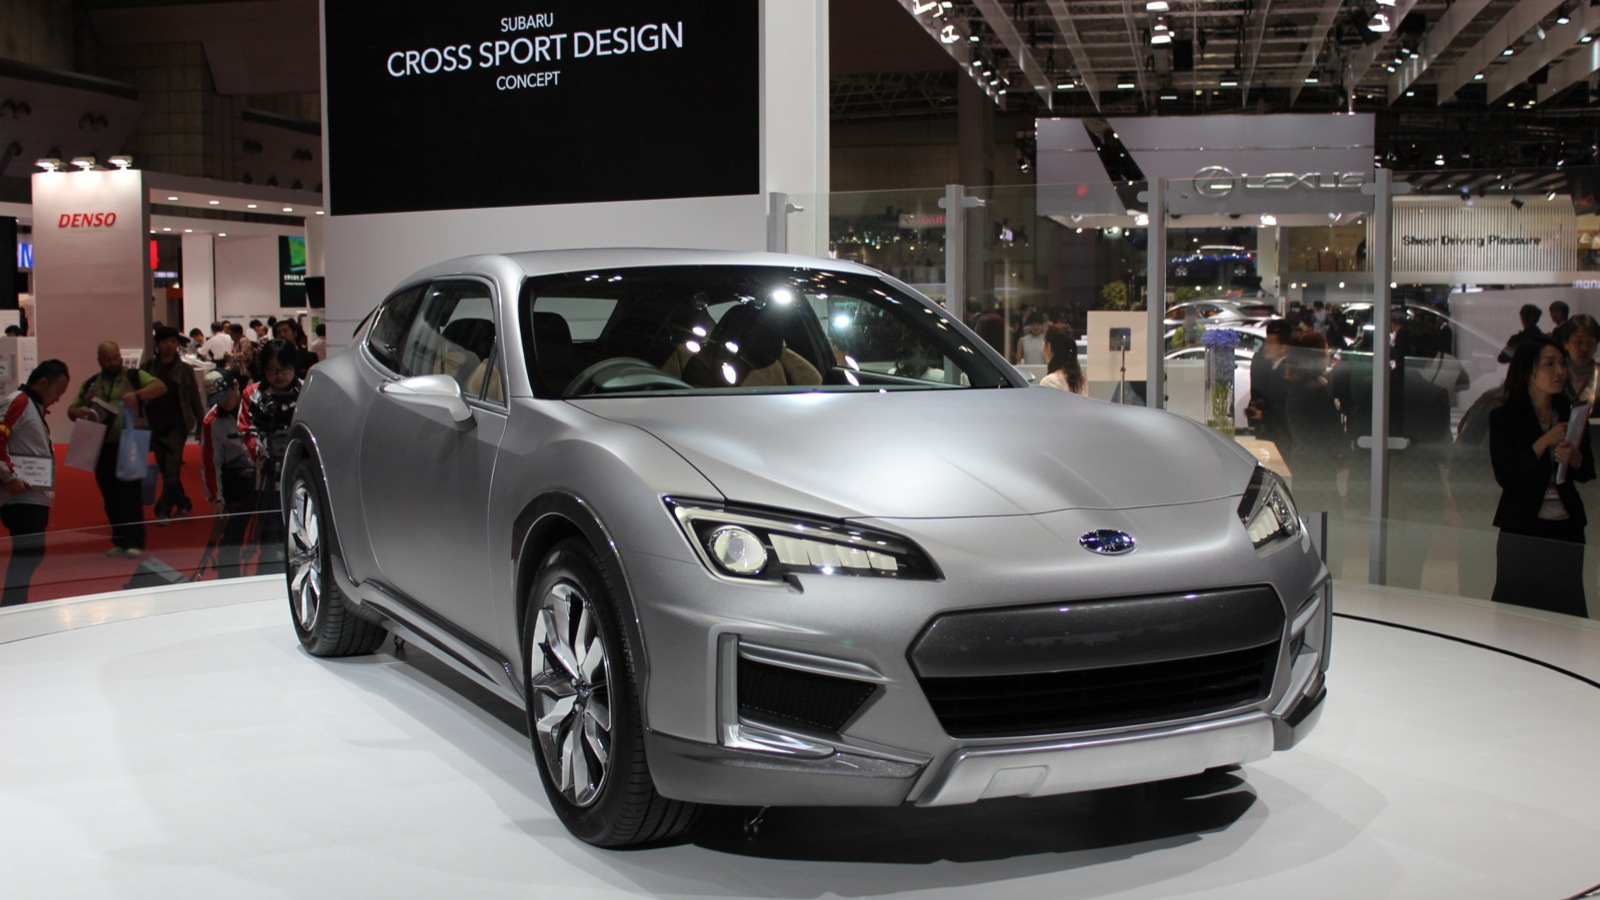 Subaru Cross Sport Design Concept  -  2013 Tokyo Motor Show